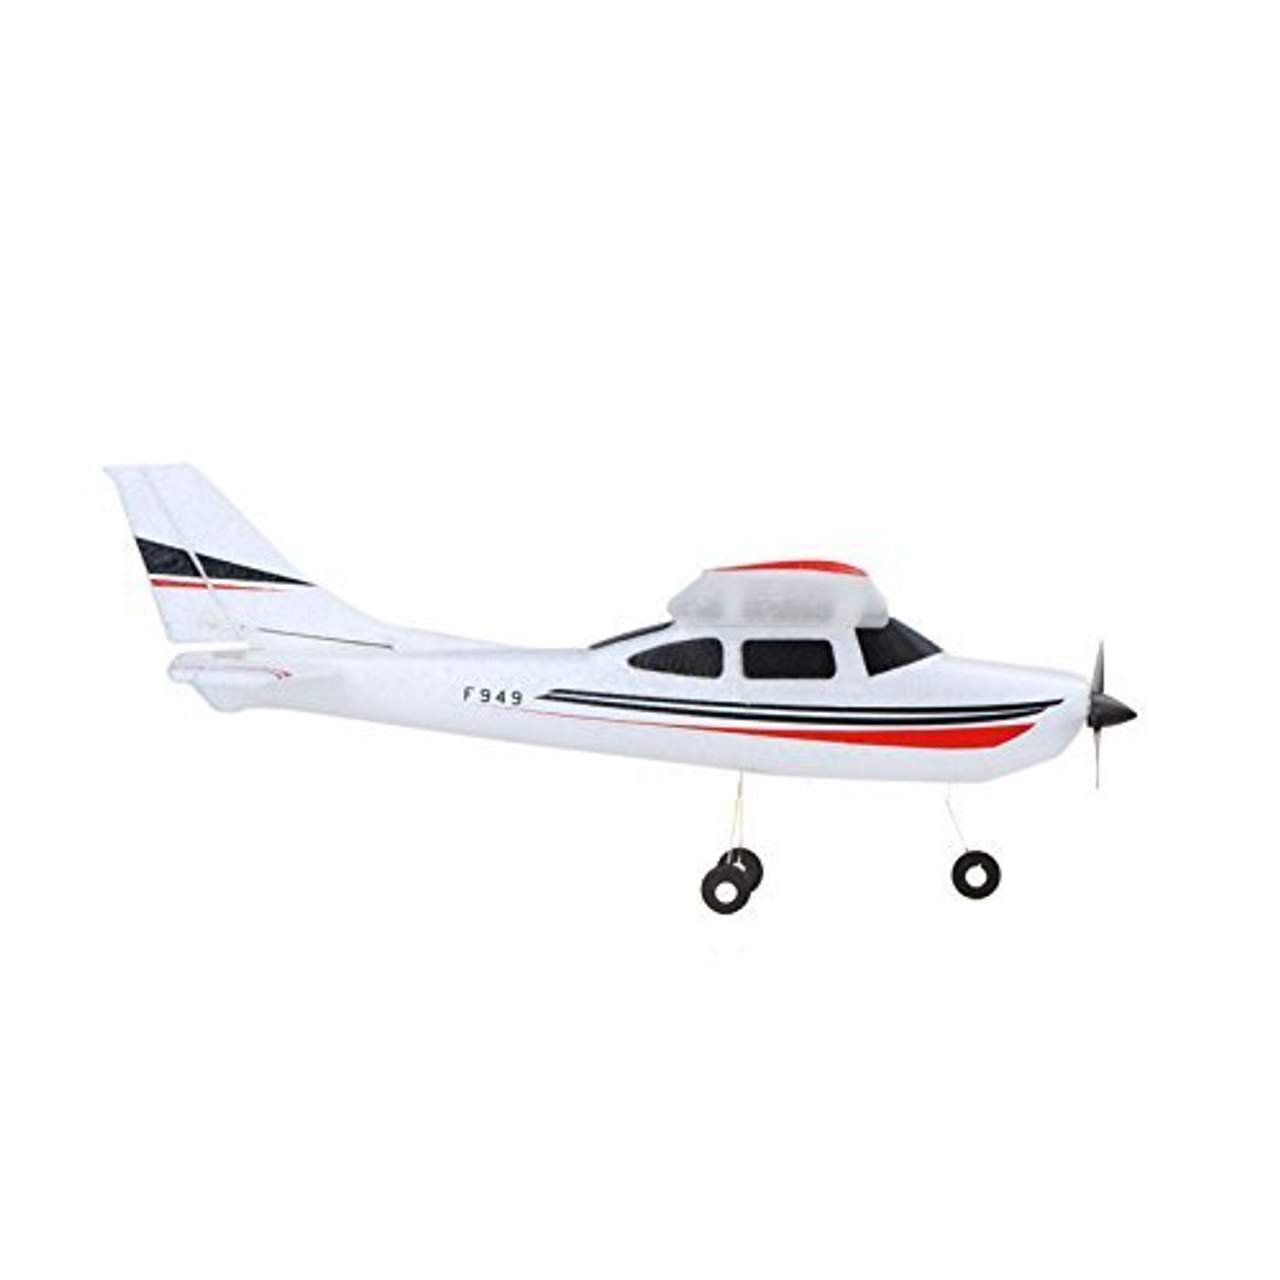 s-idee 01506 Flugzeug Cessna F949 ferngesteuert